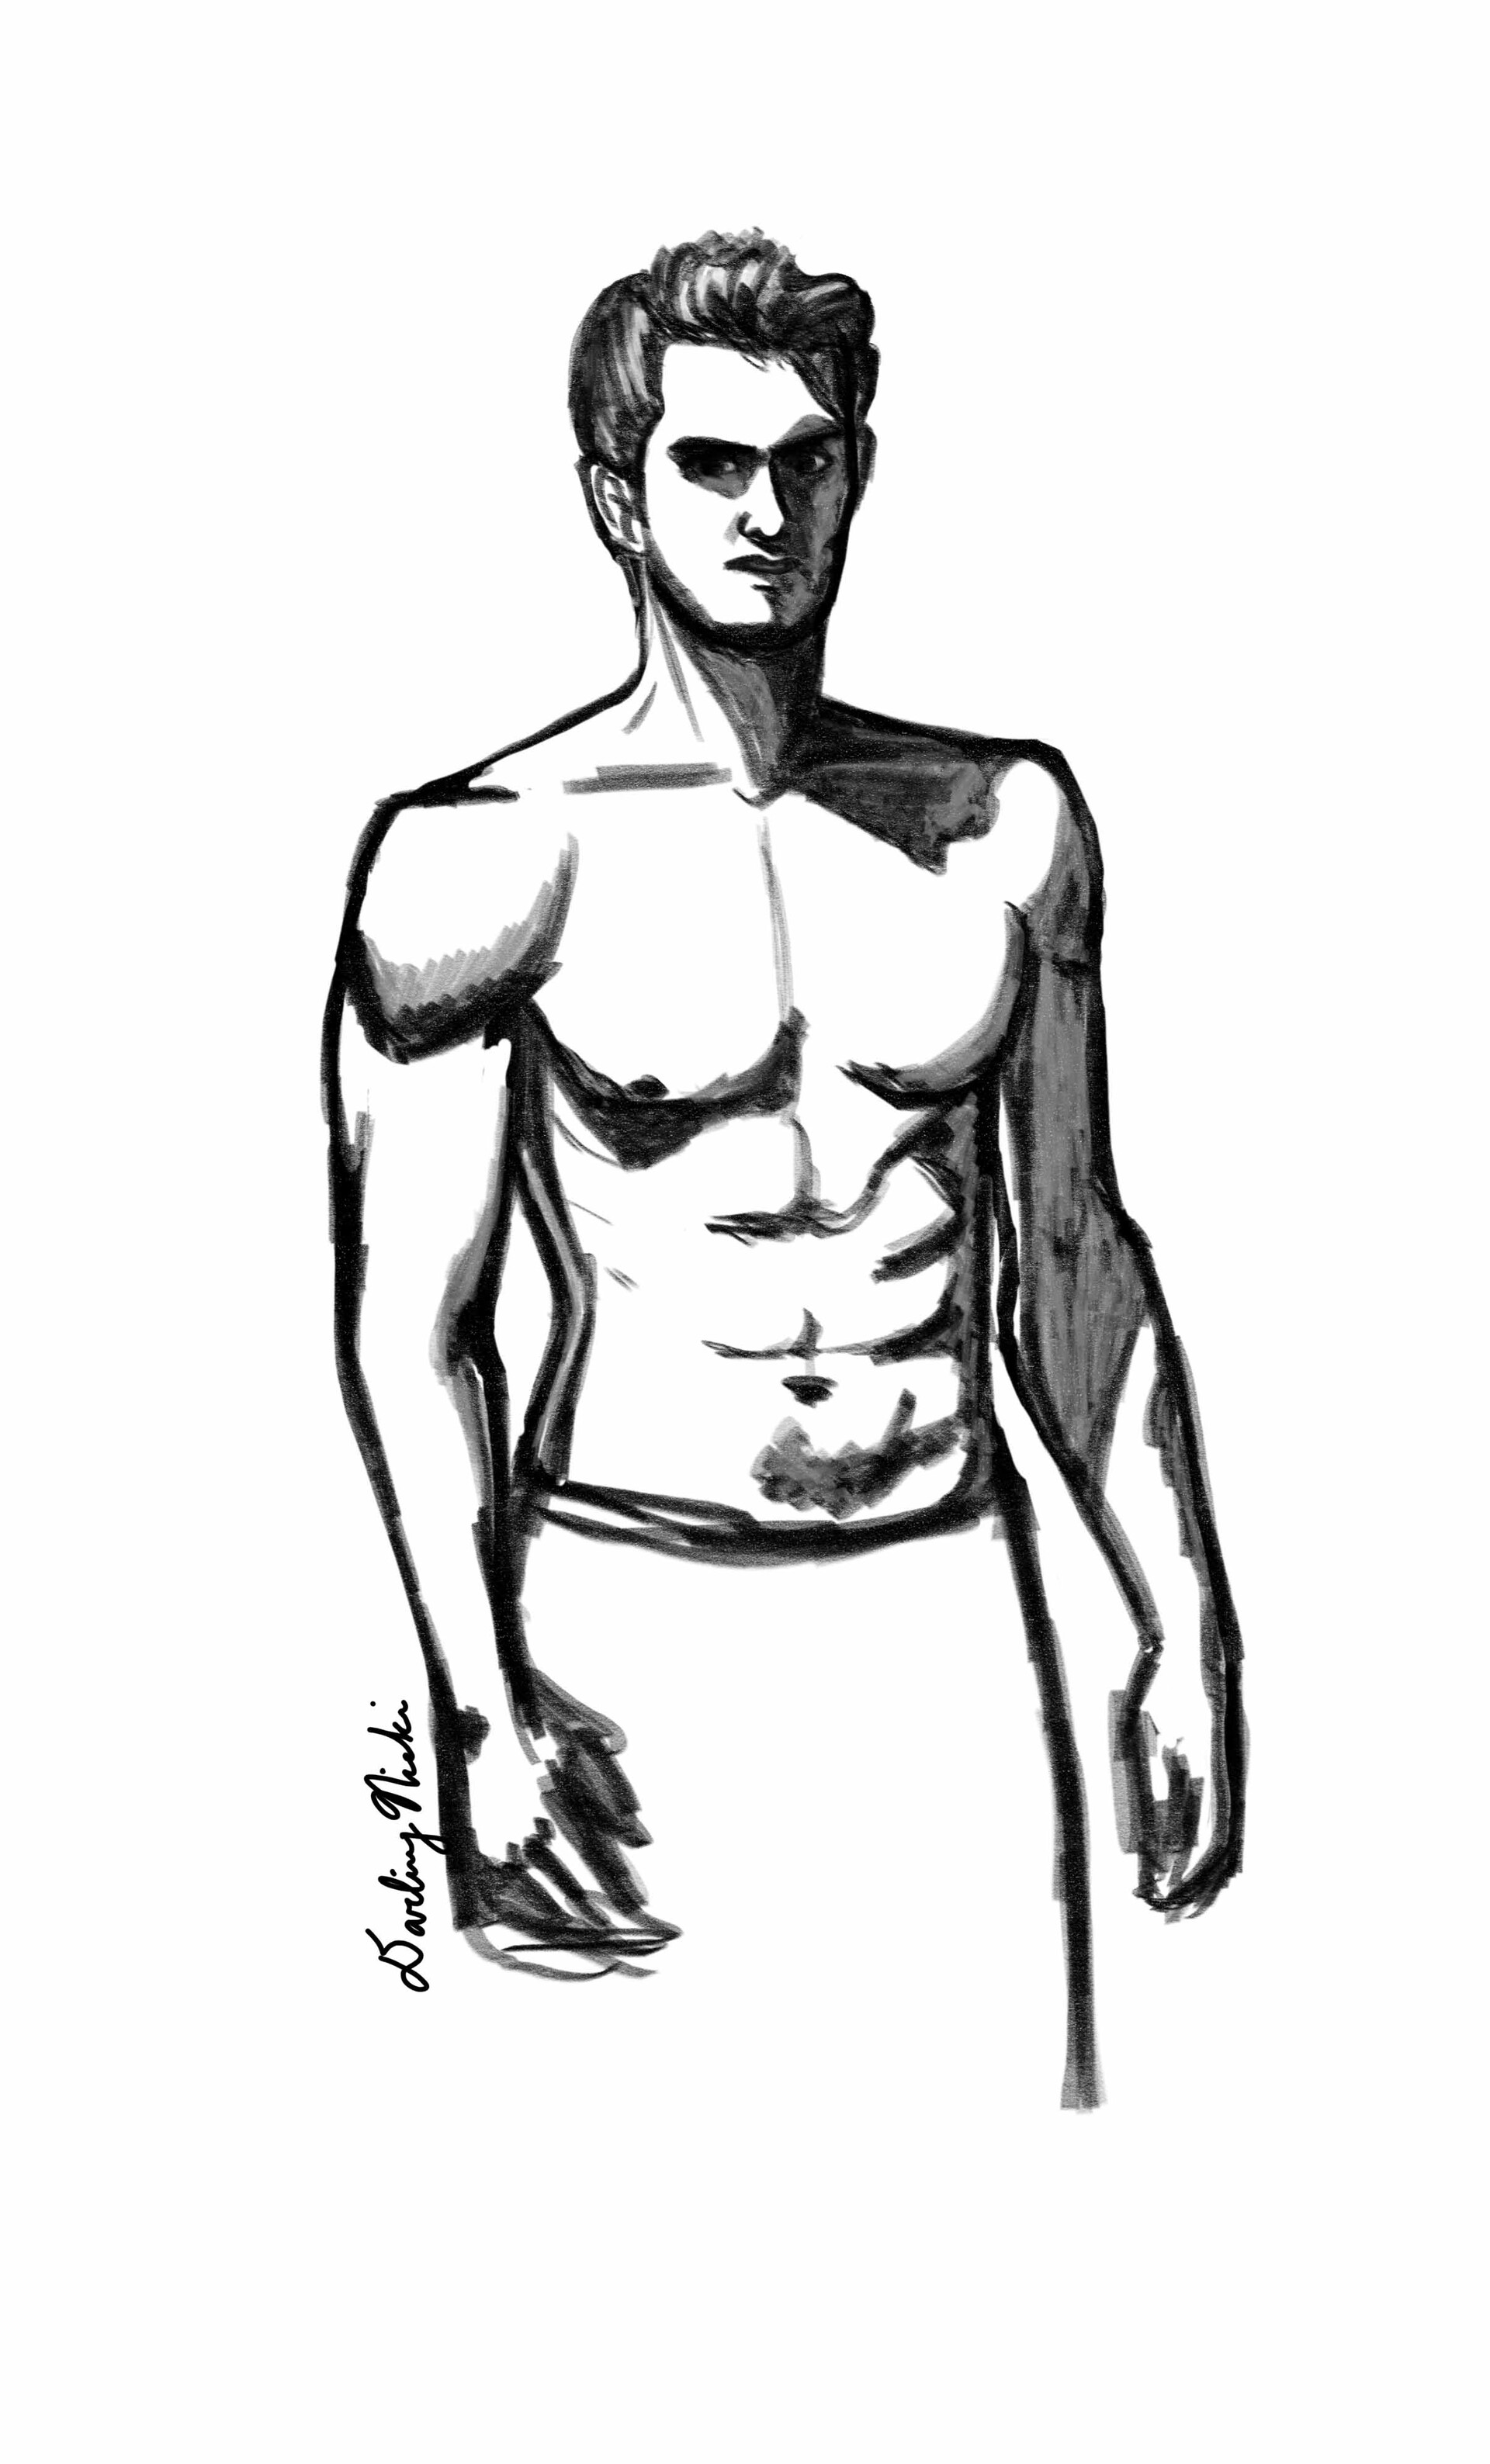 Download 298 Kj / 71 Calories / - Body Sketch Drawing Male - Full Size PNG  Image - PNGkit